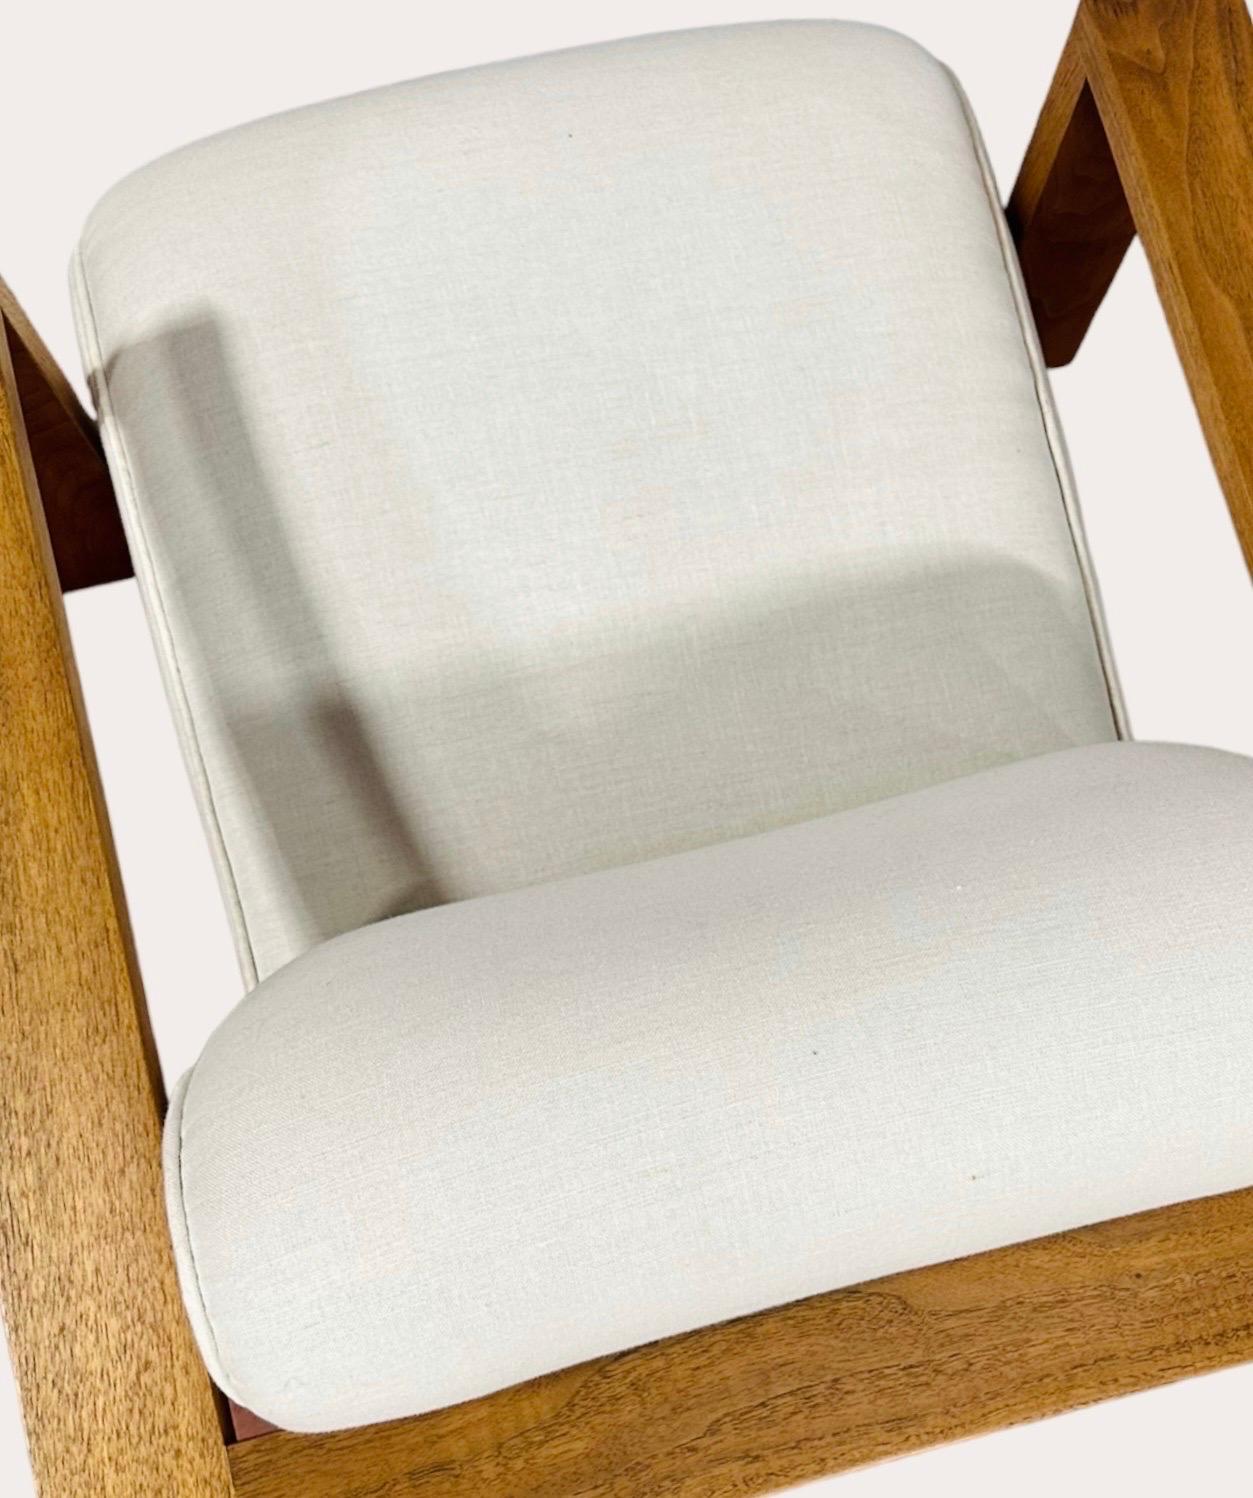 Upholstery Vladimir Kagan Child’s Cubist Chair Angela Jolie and Brad Pitt, Walnut, USA For Sale